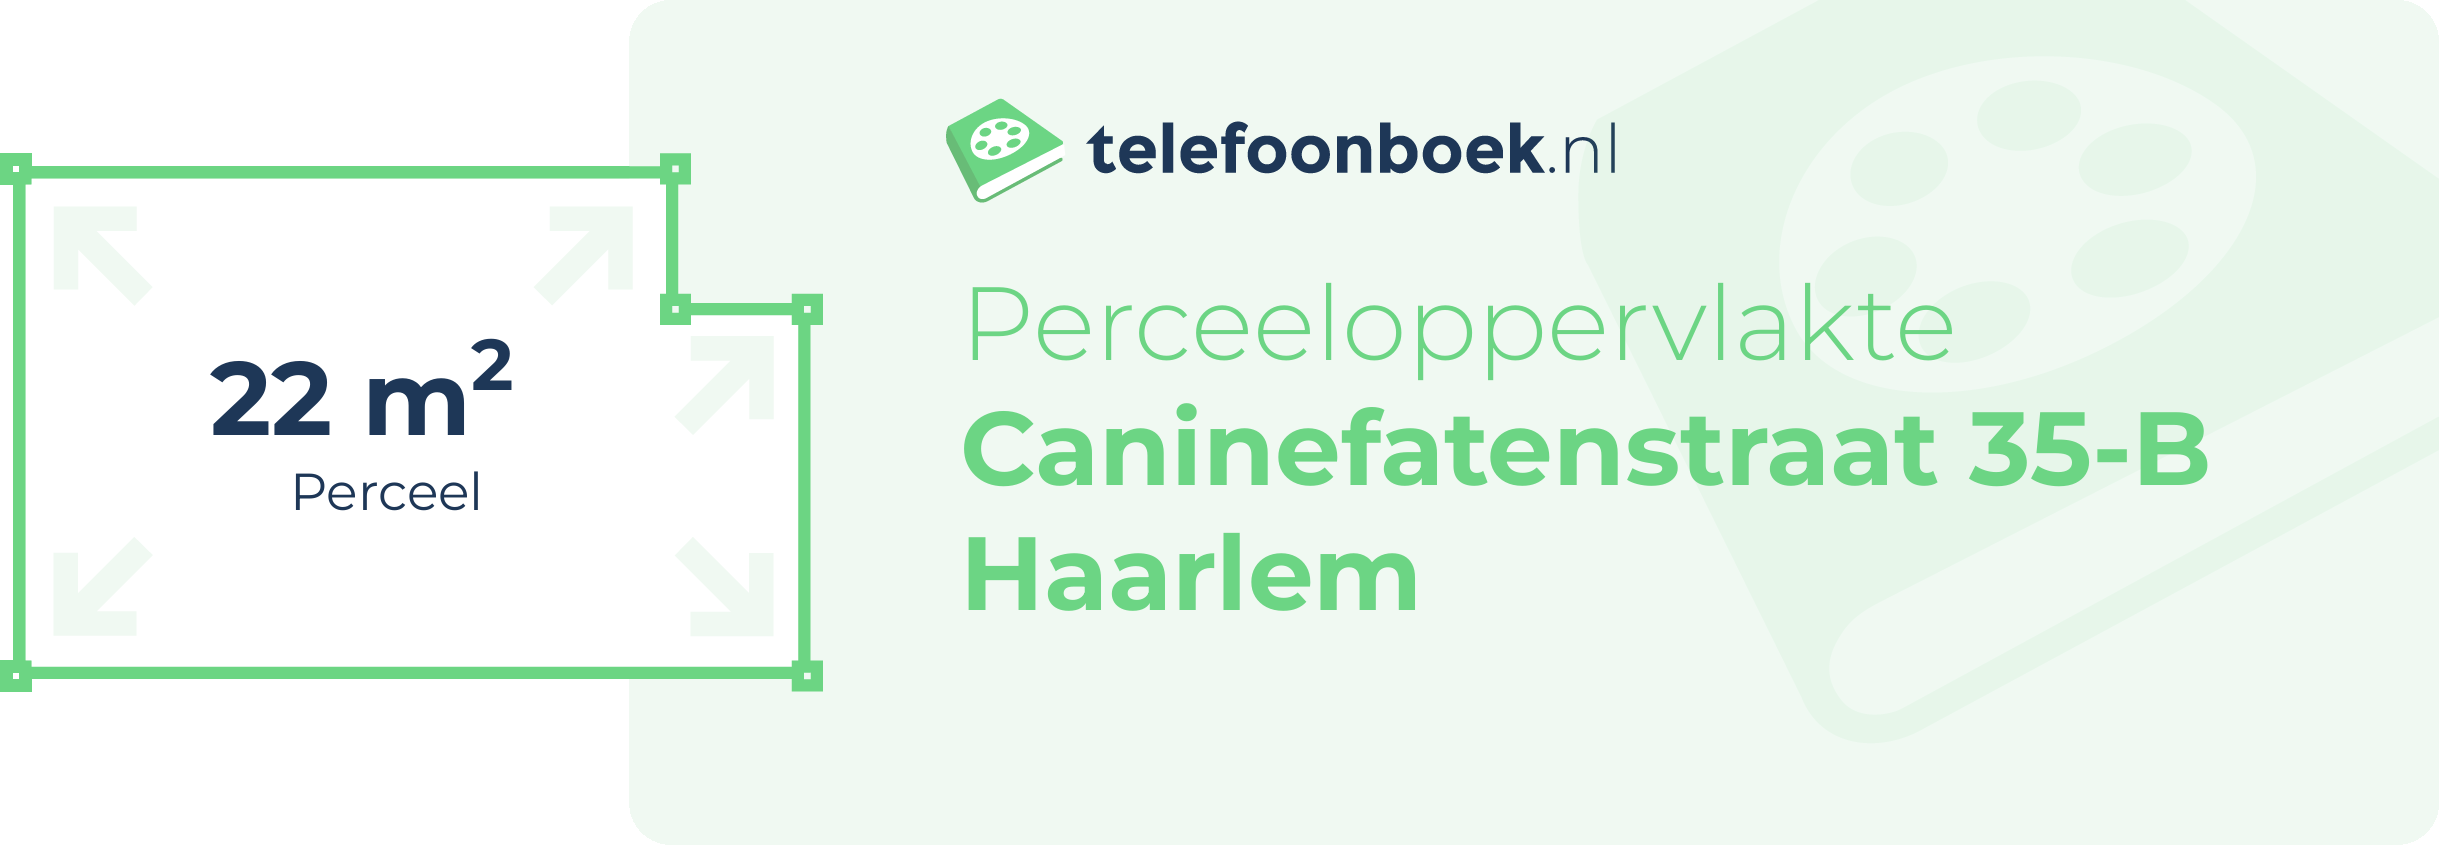 Perceeloppervlakte Caninefatenstraat 35-B Haarlem